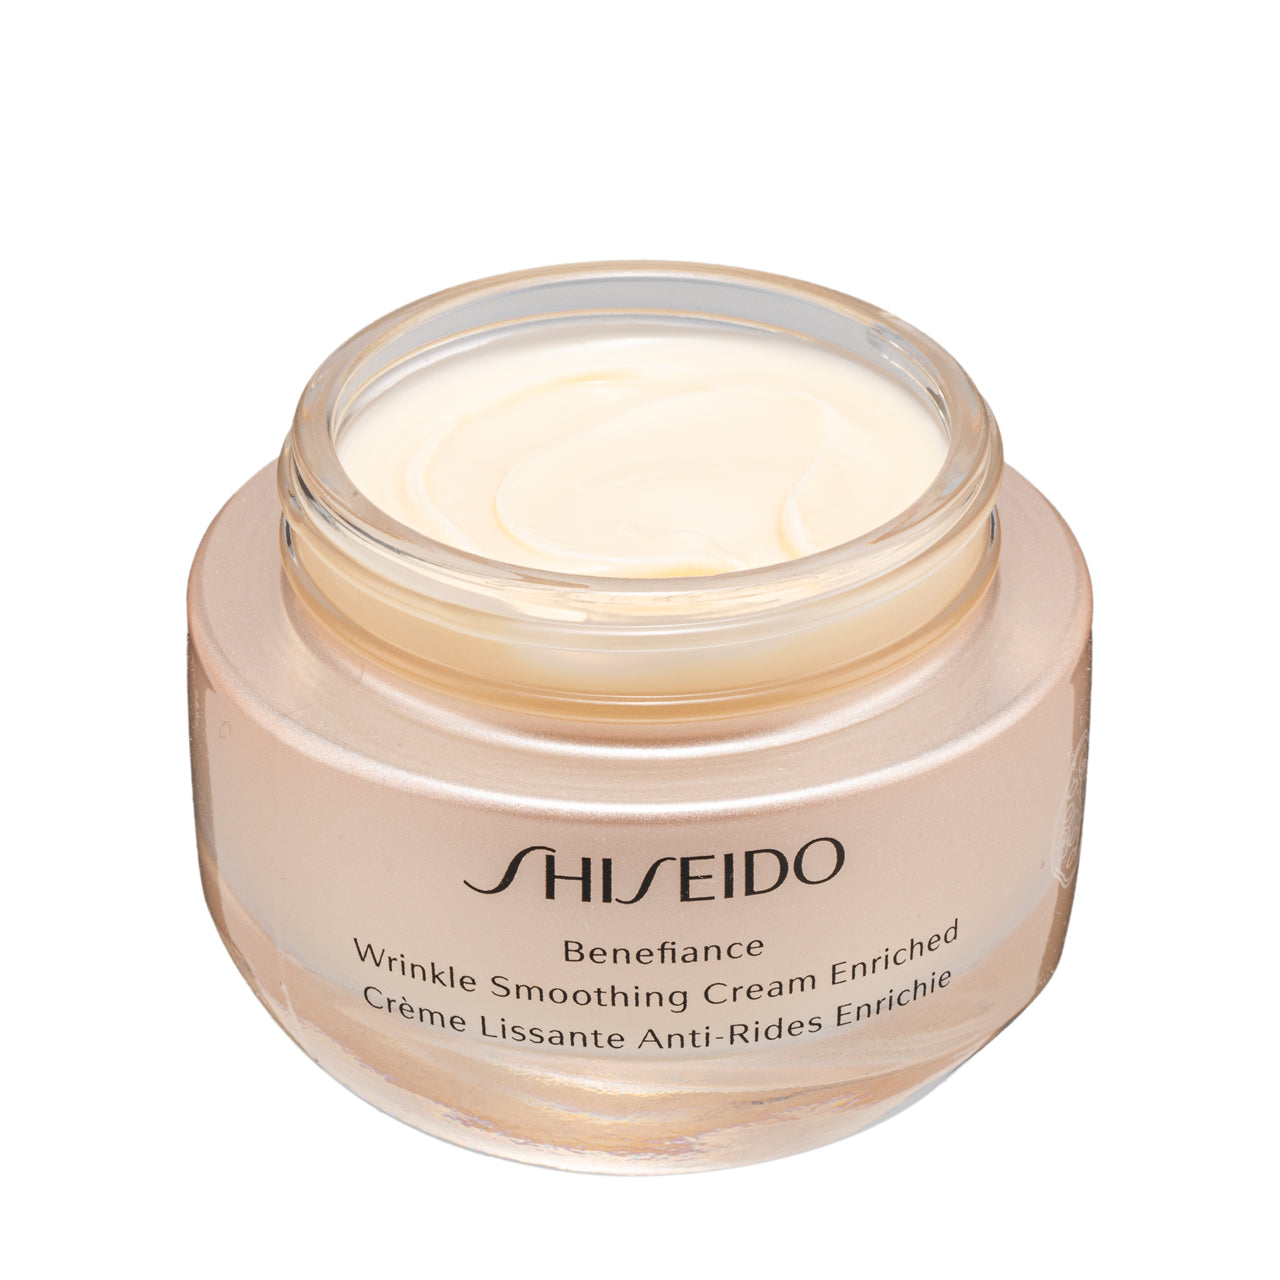 Shiseido Wrinkle Smoothing Cream Enriched 50ML